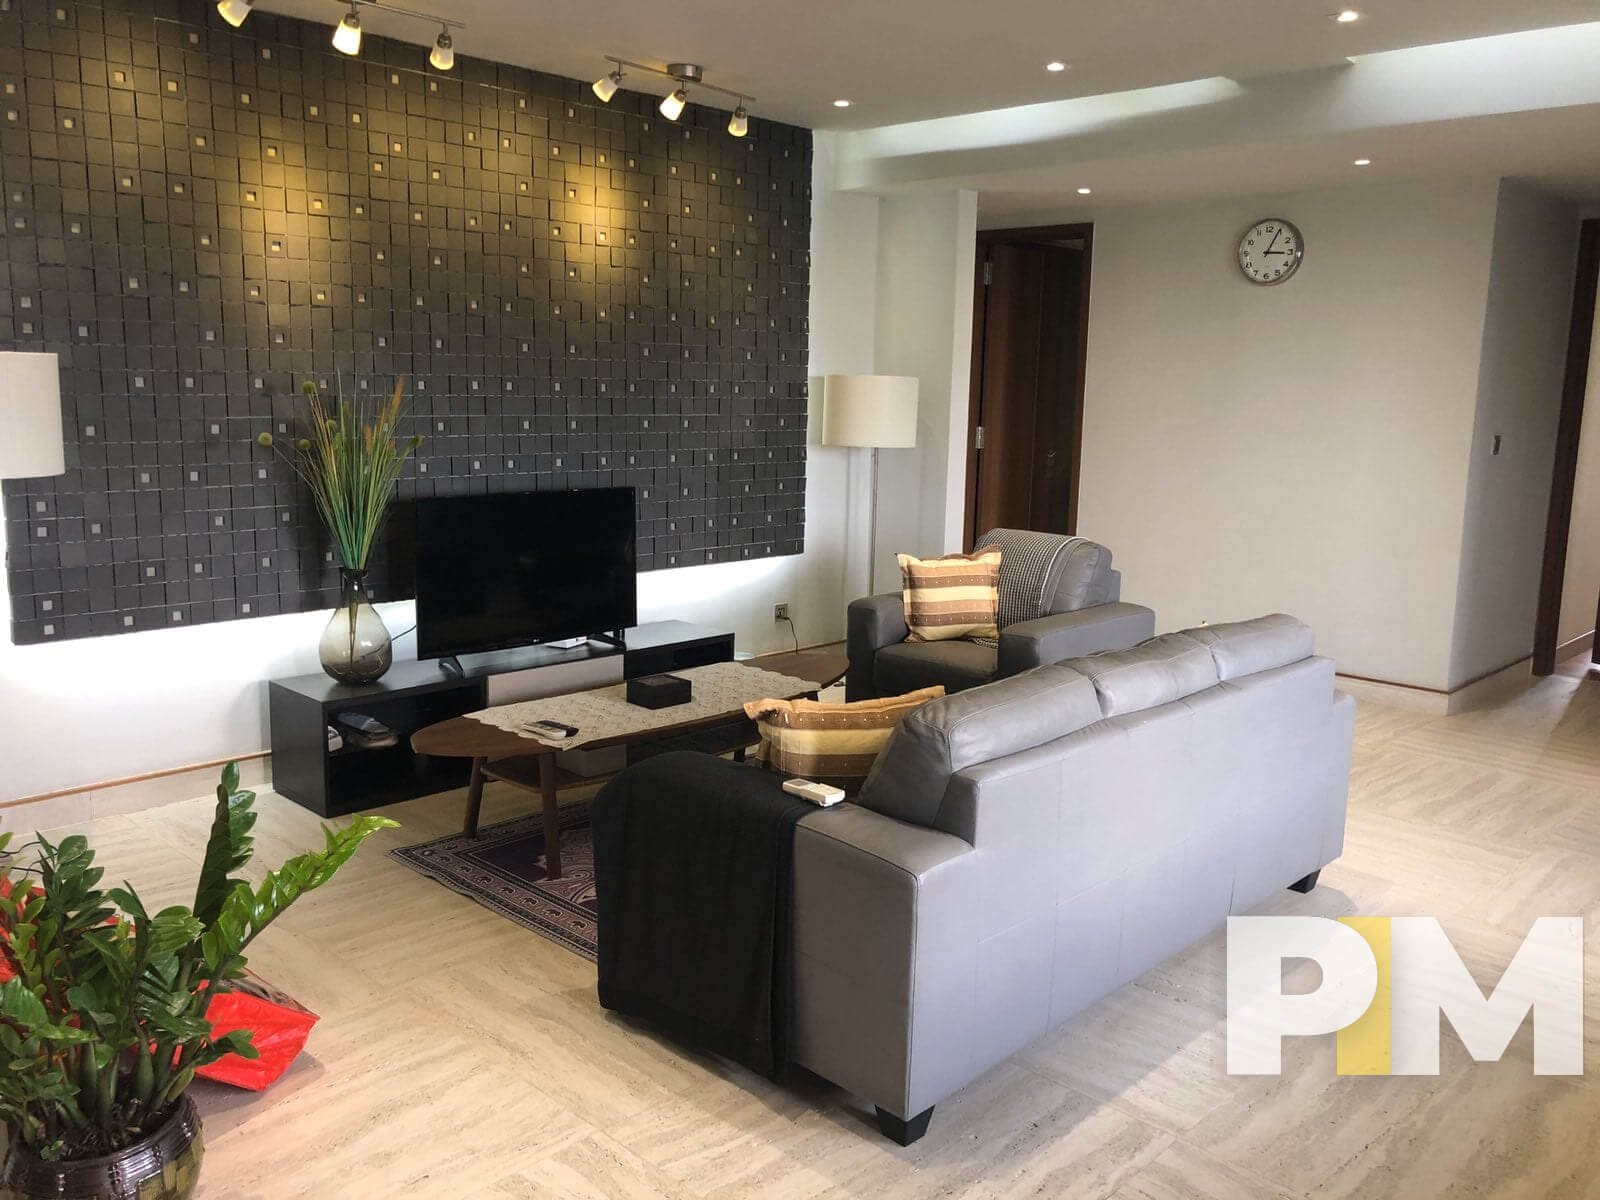 living room with TV - Yangon Property